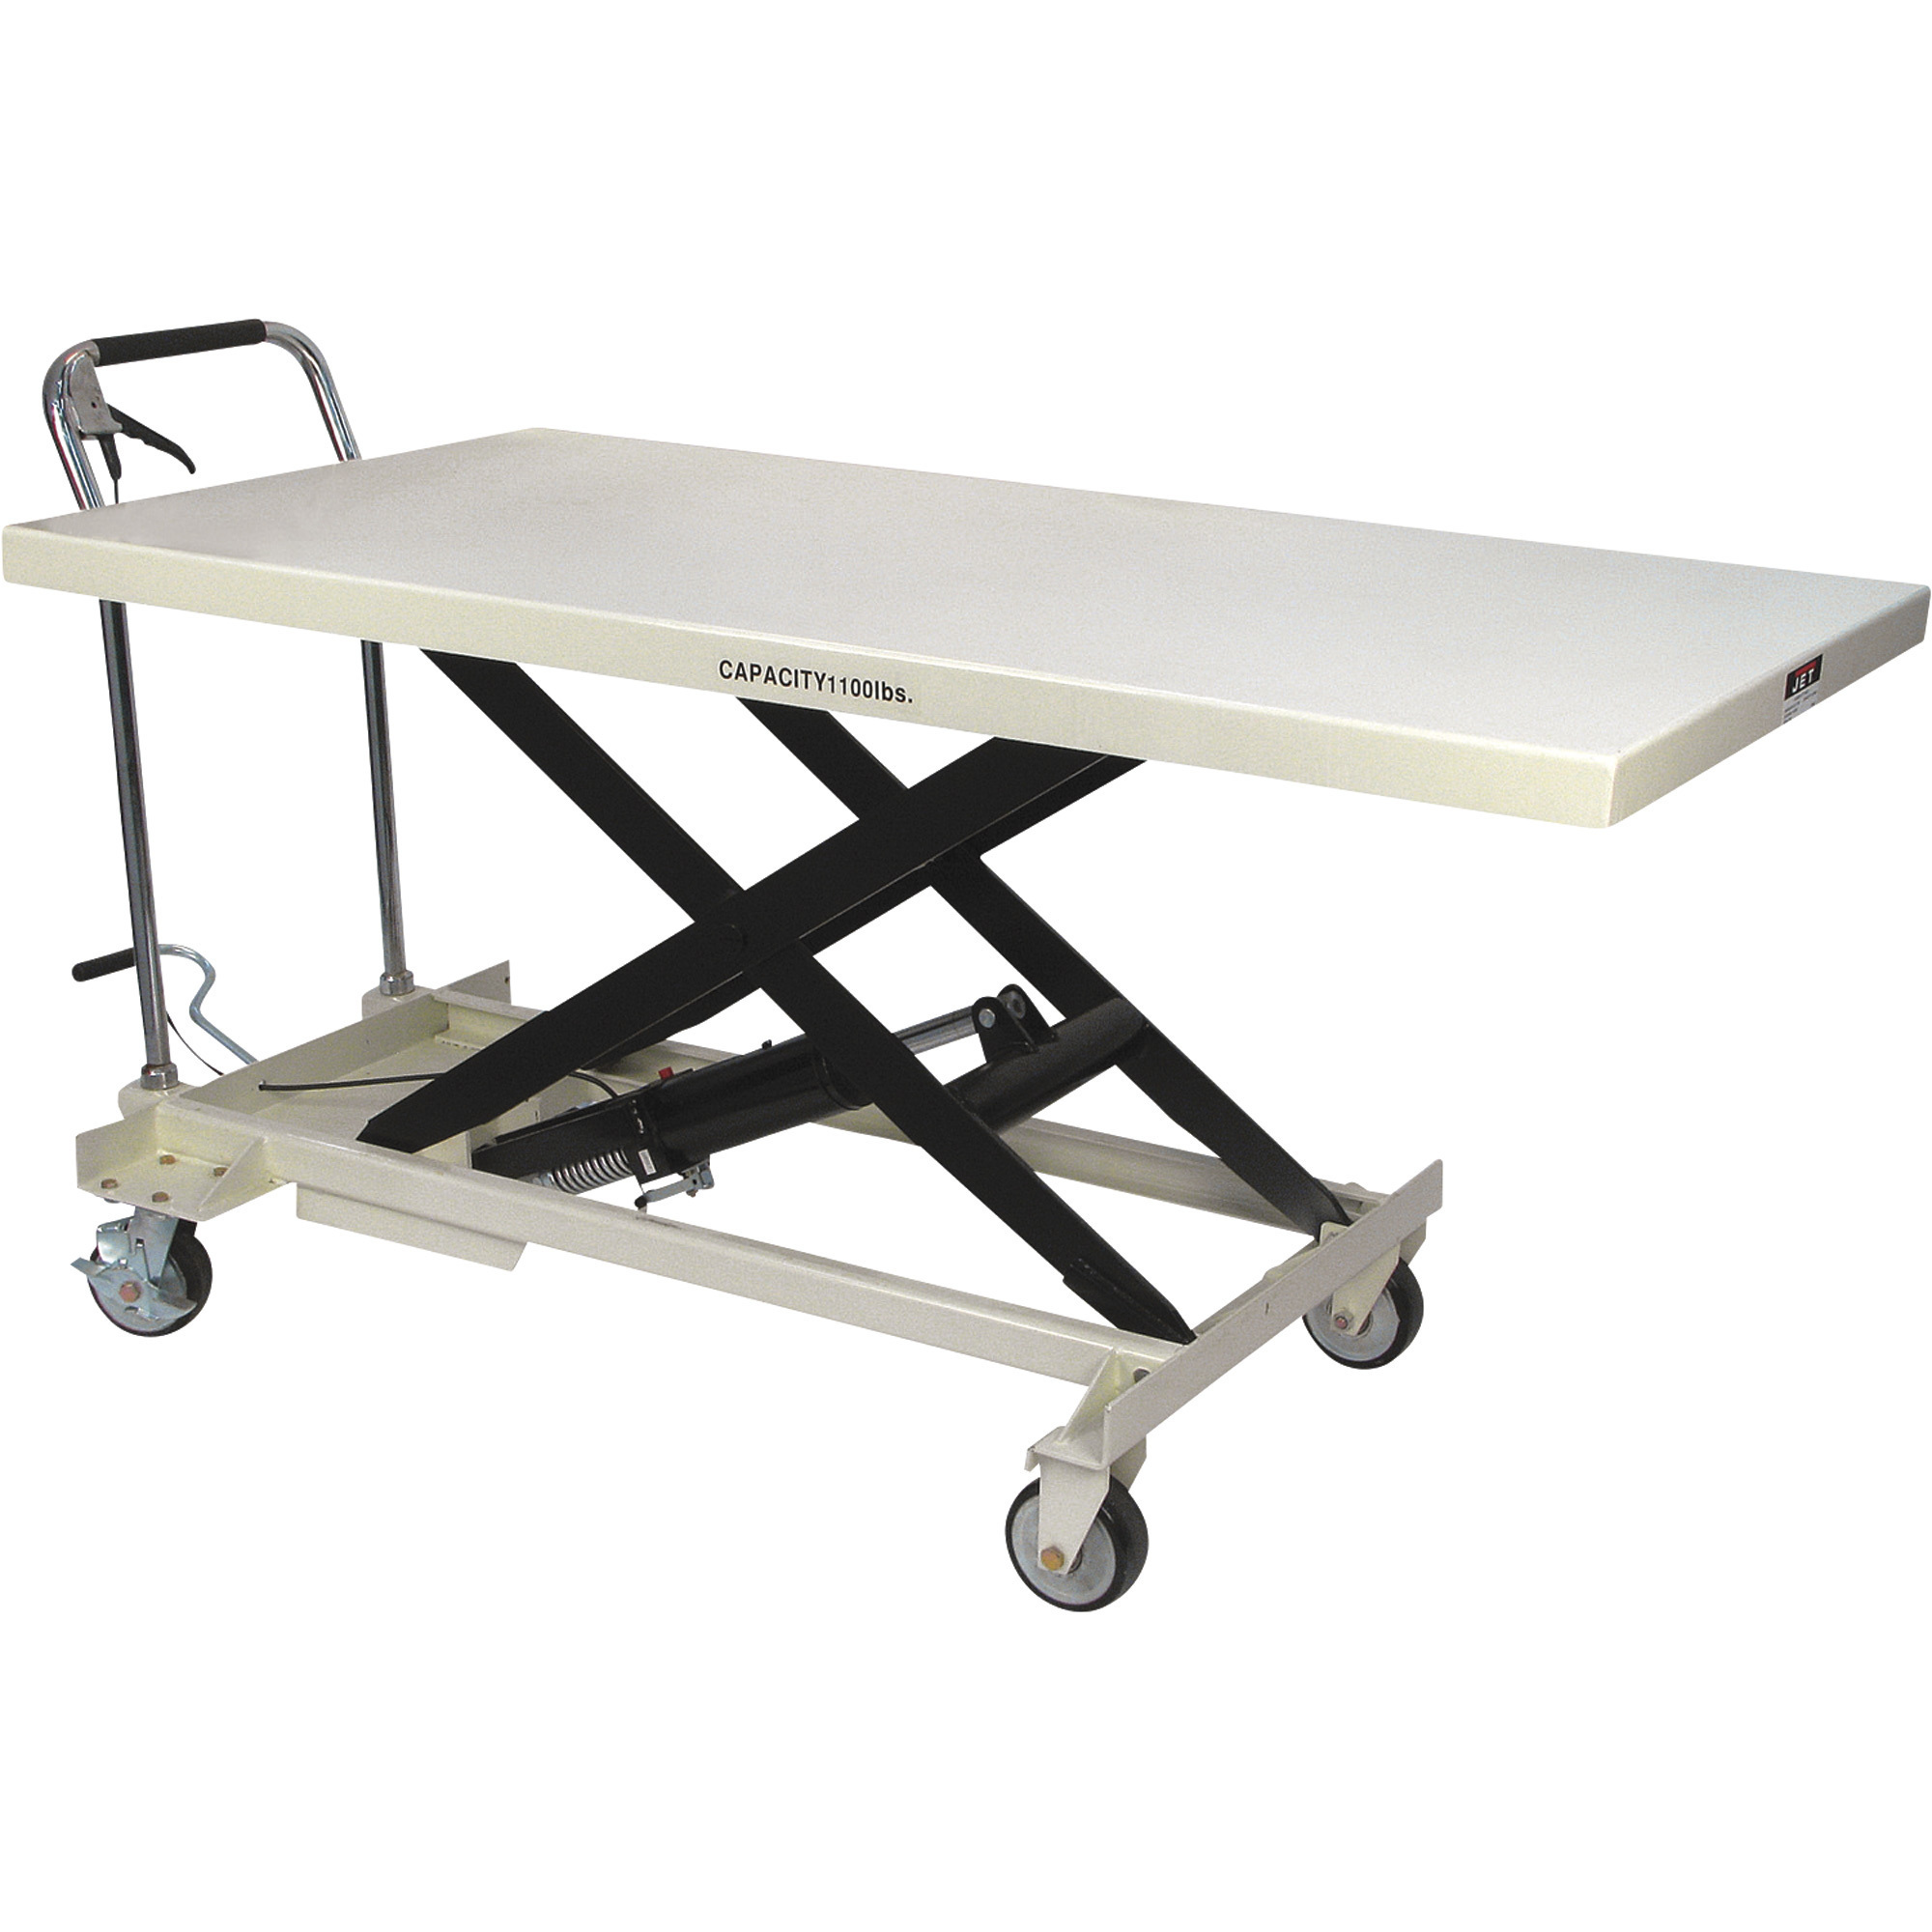 JET Jumbo Hydraulic Scissor Lift Table, 1,100-Lb. Capacity, Model SLT-1100